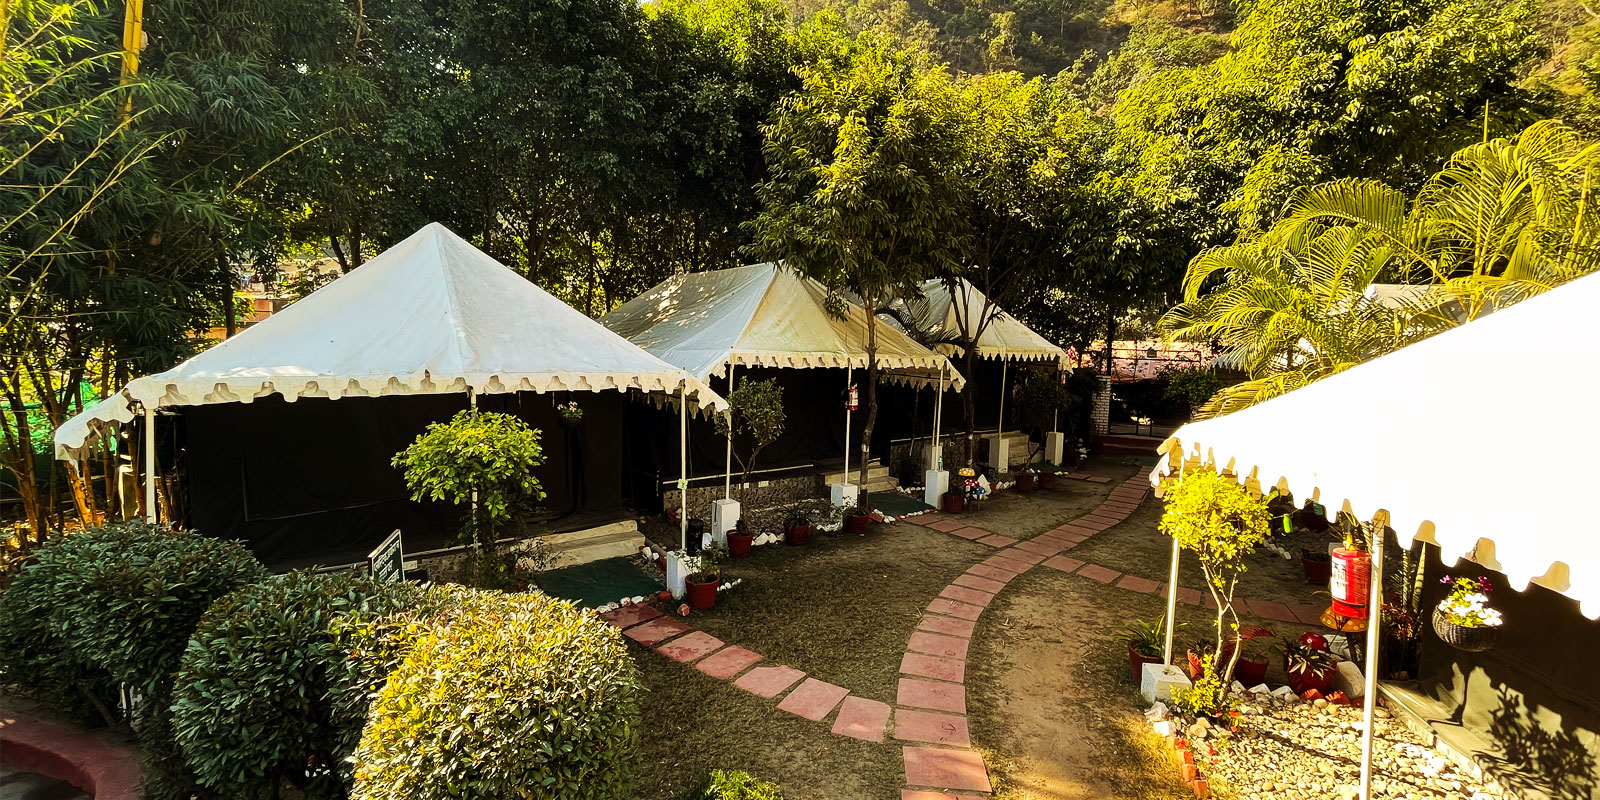 AquaForest Rishikesh: #1 Camping Site in Rishikesh